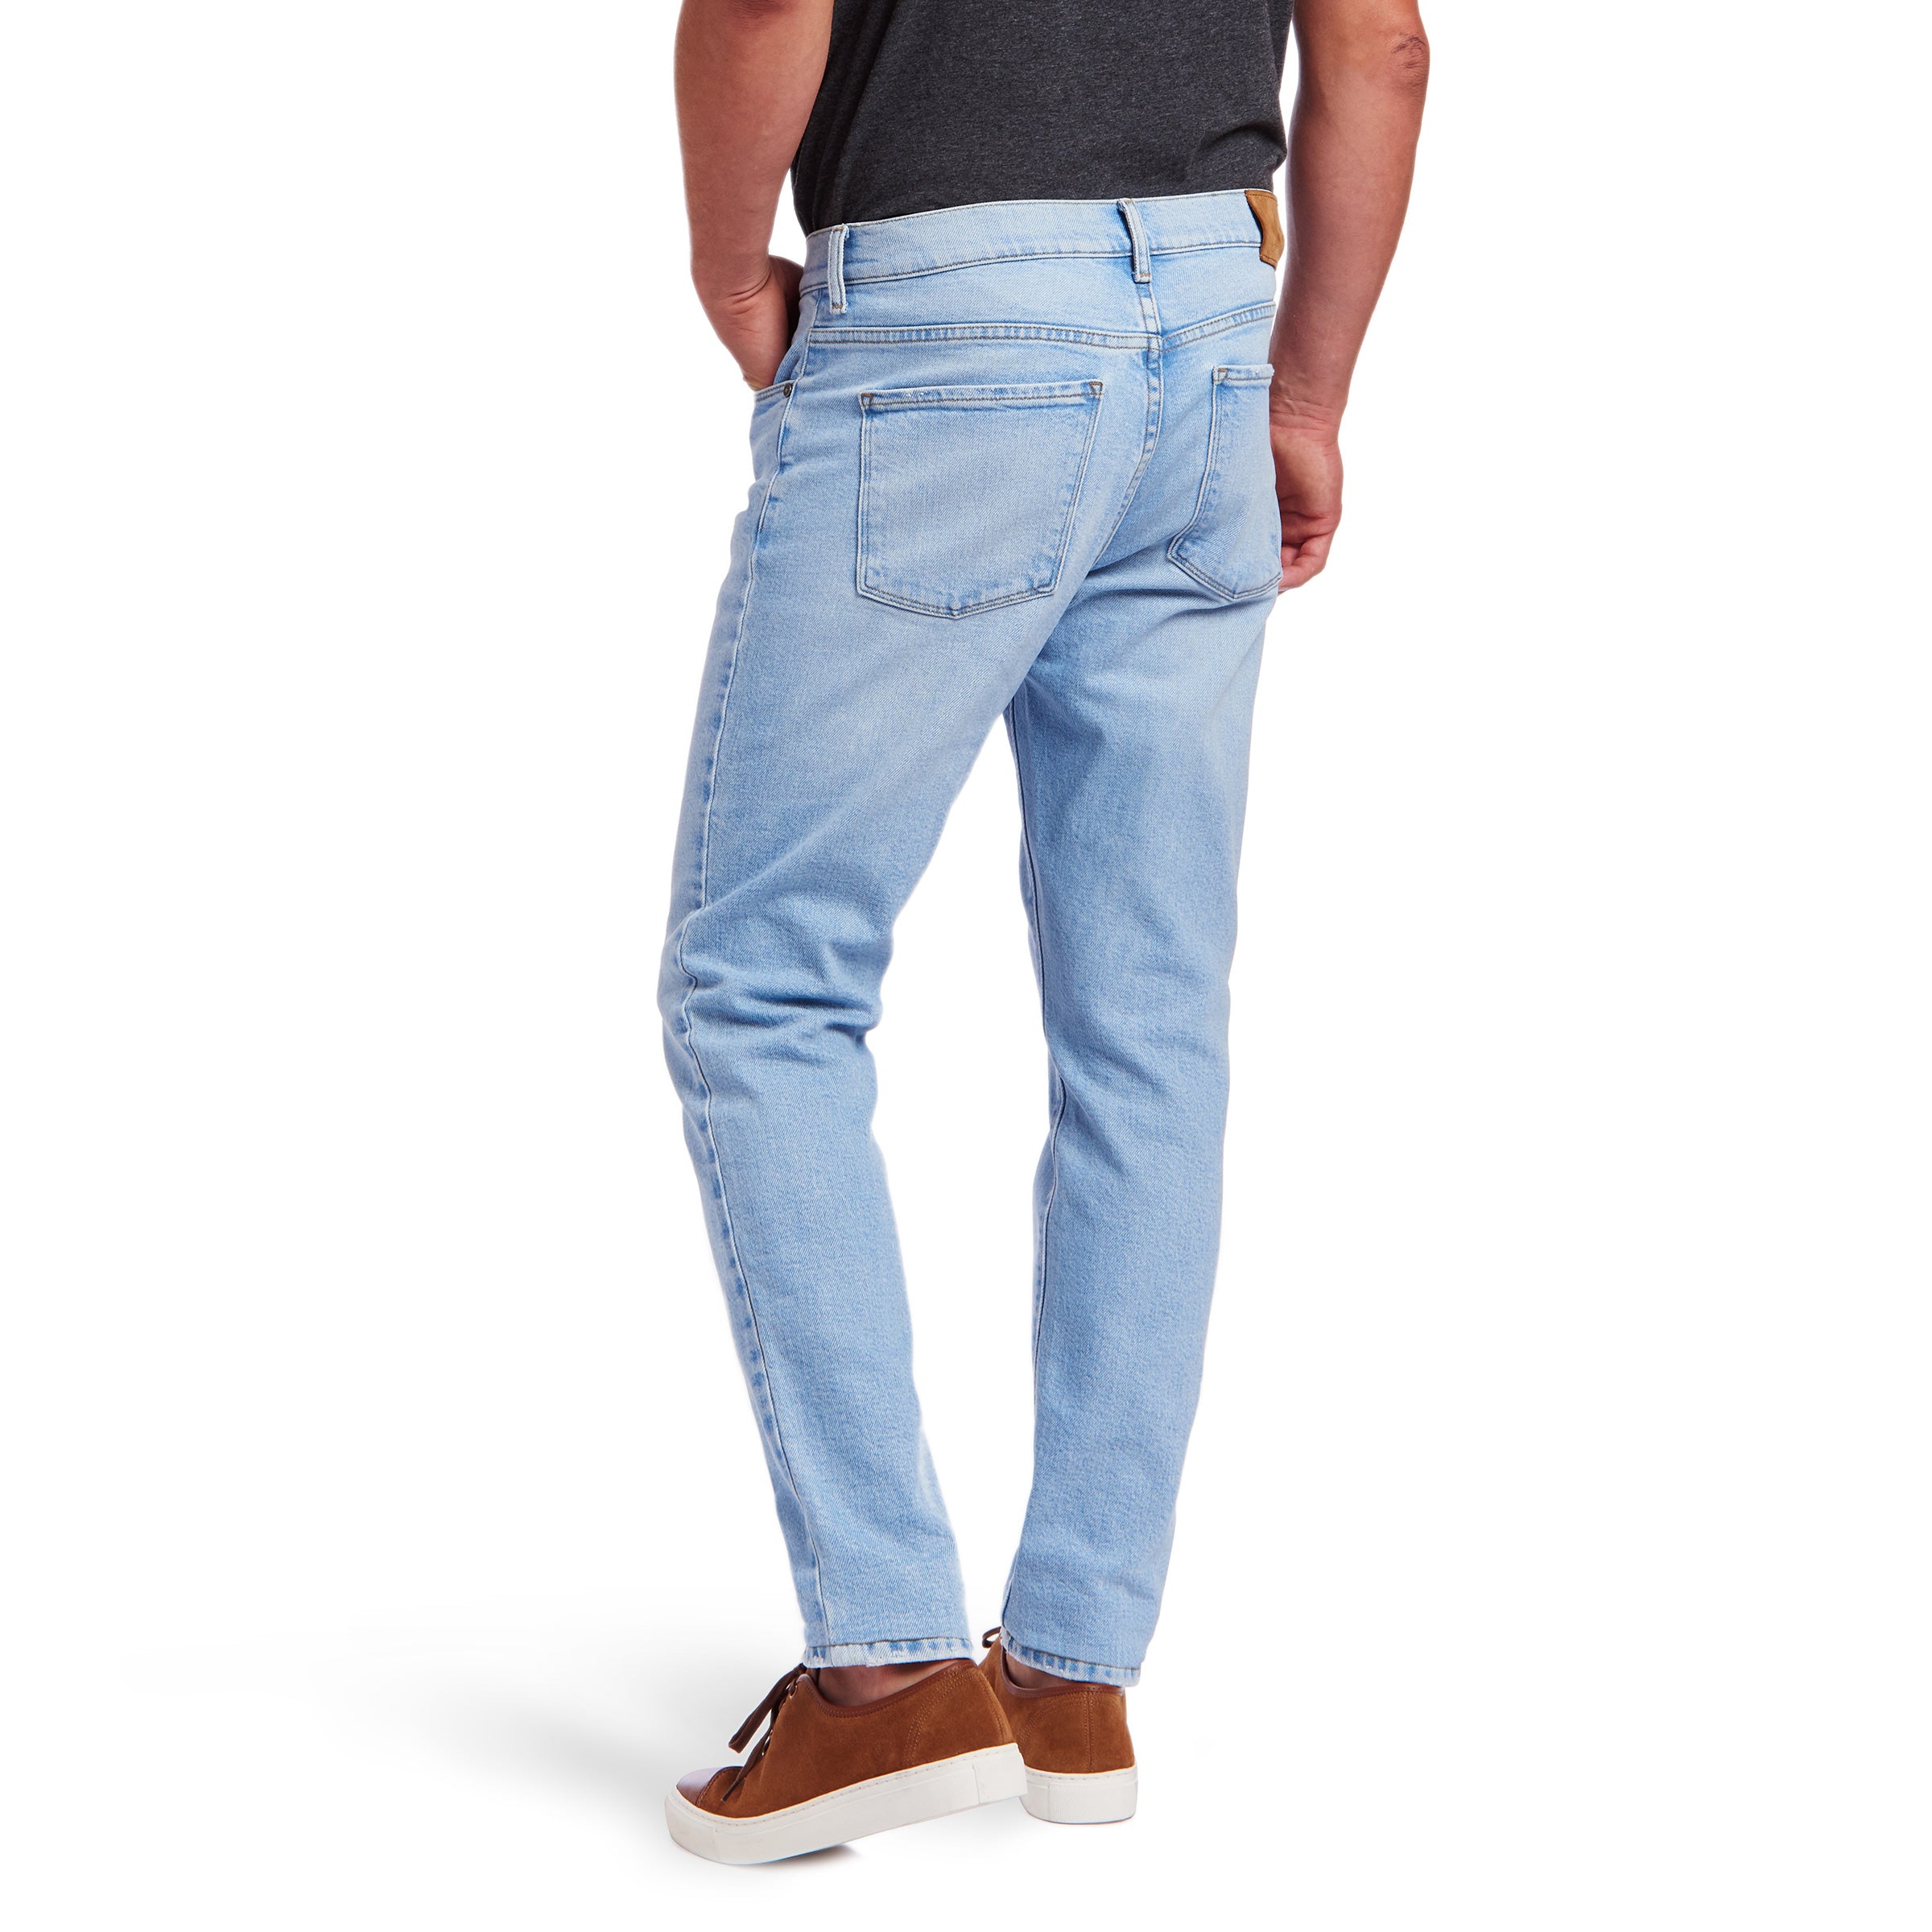 Men wearing Light Blue Skinny Hubert Jeans